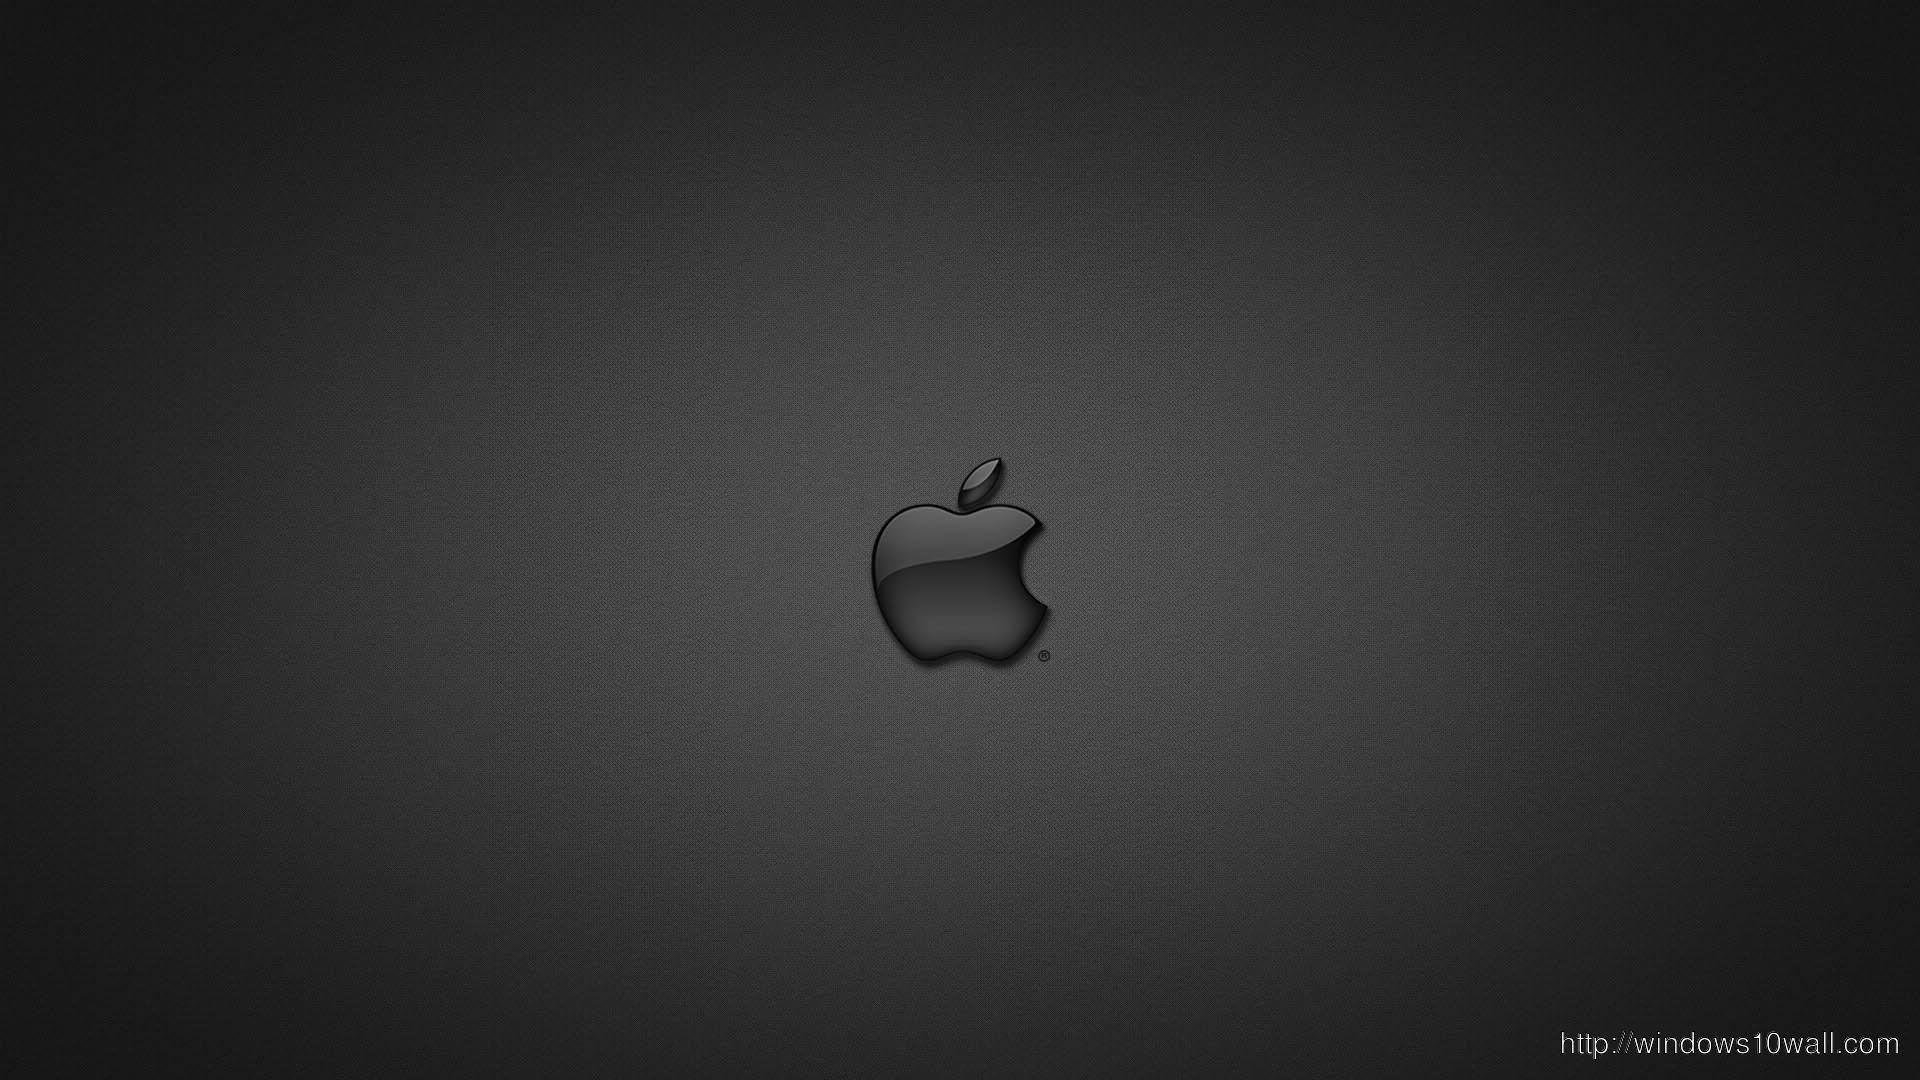 Apple Logo Background Hd